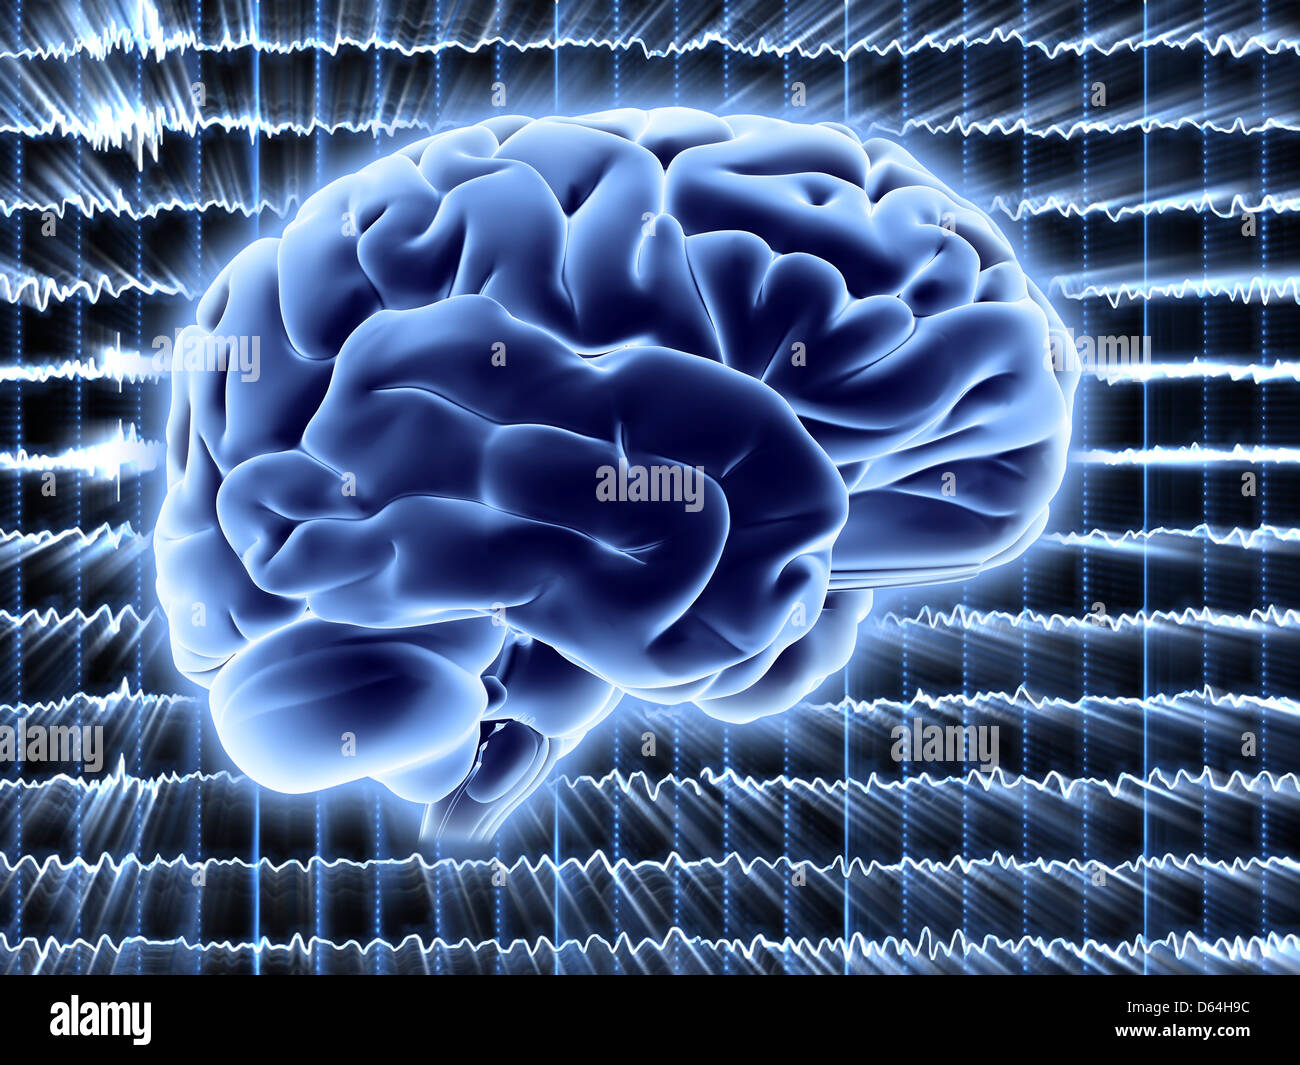 Brain activity, artwork Stock Photo